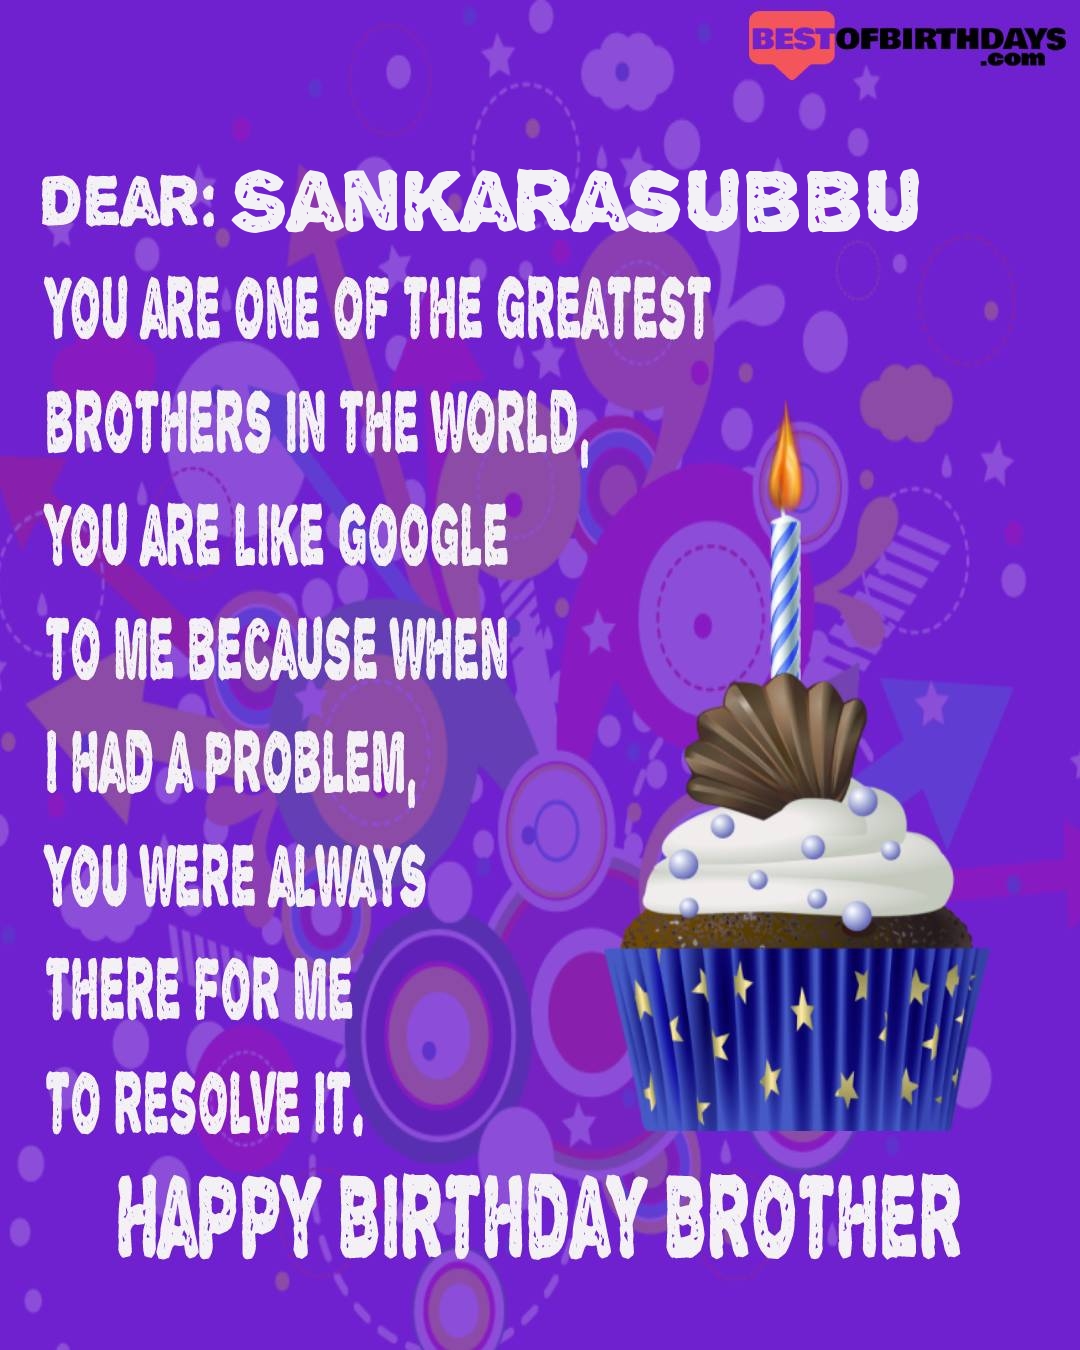 Happy birthday sankarasubbu bhai brother bro